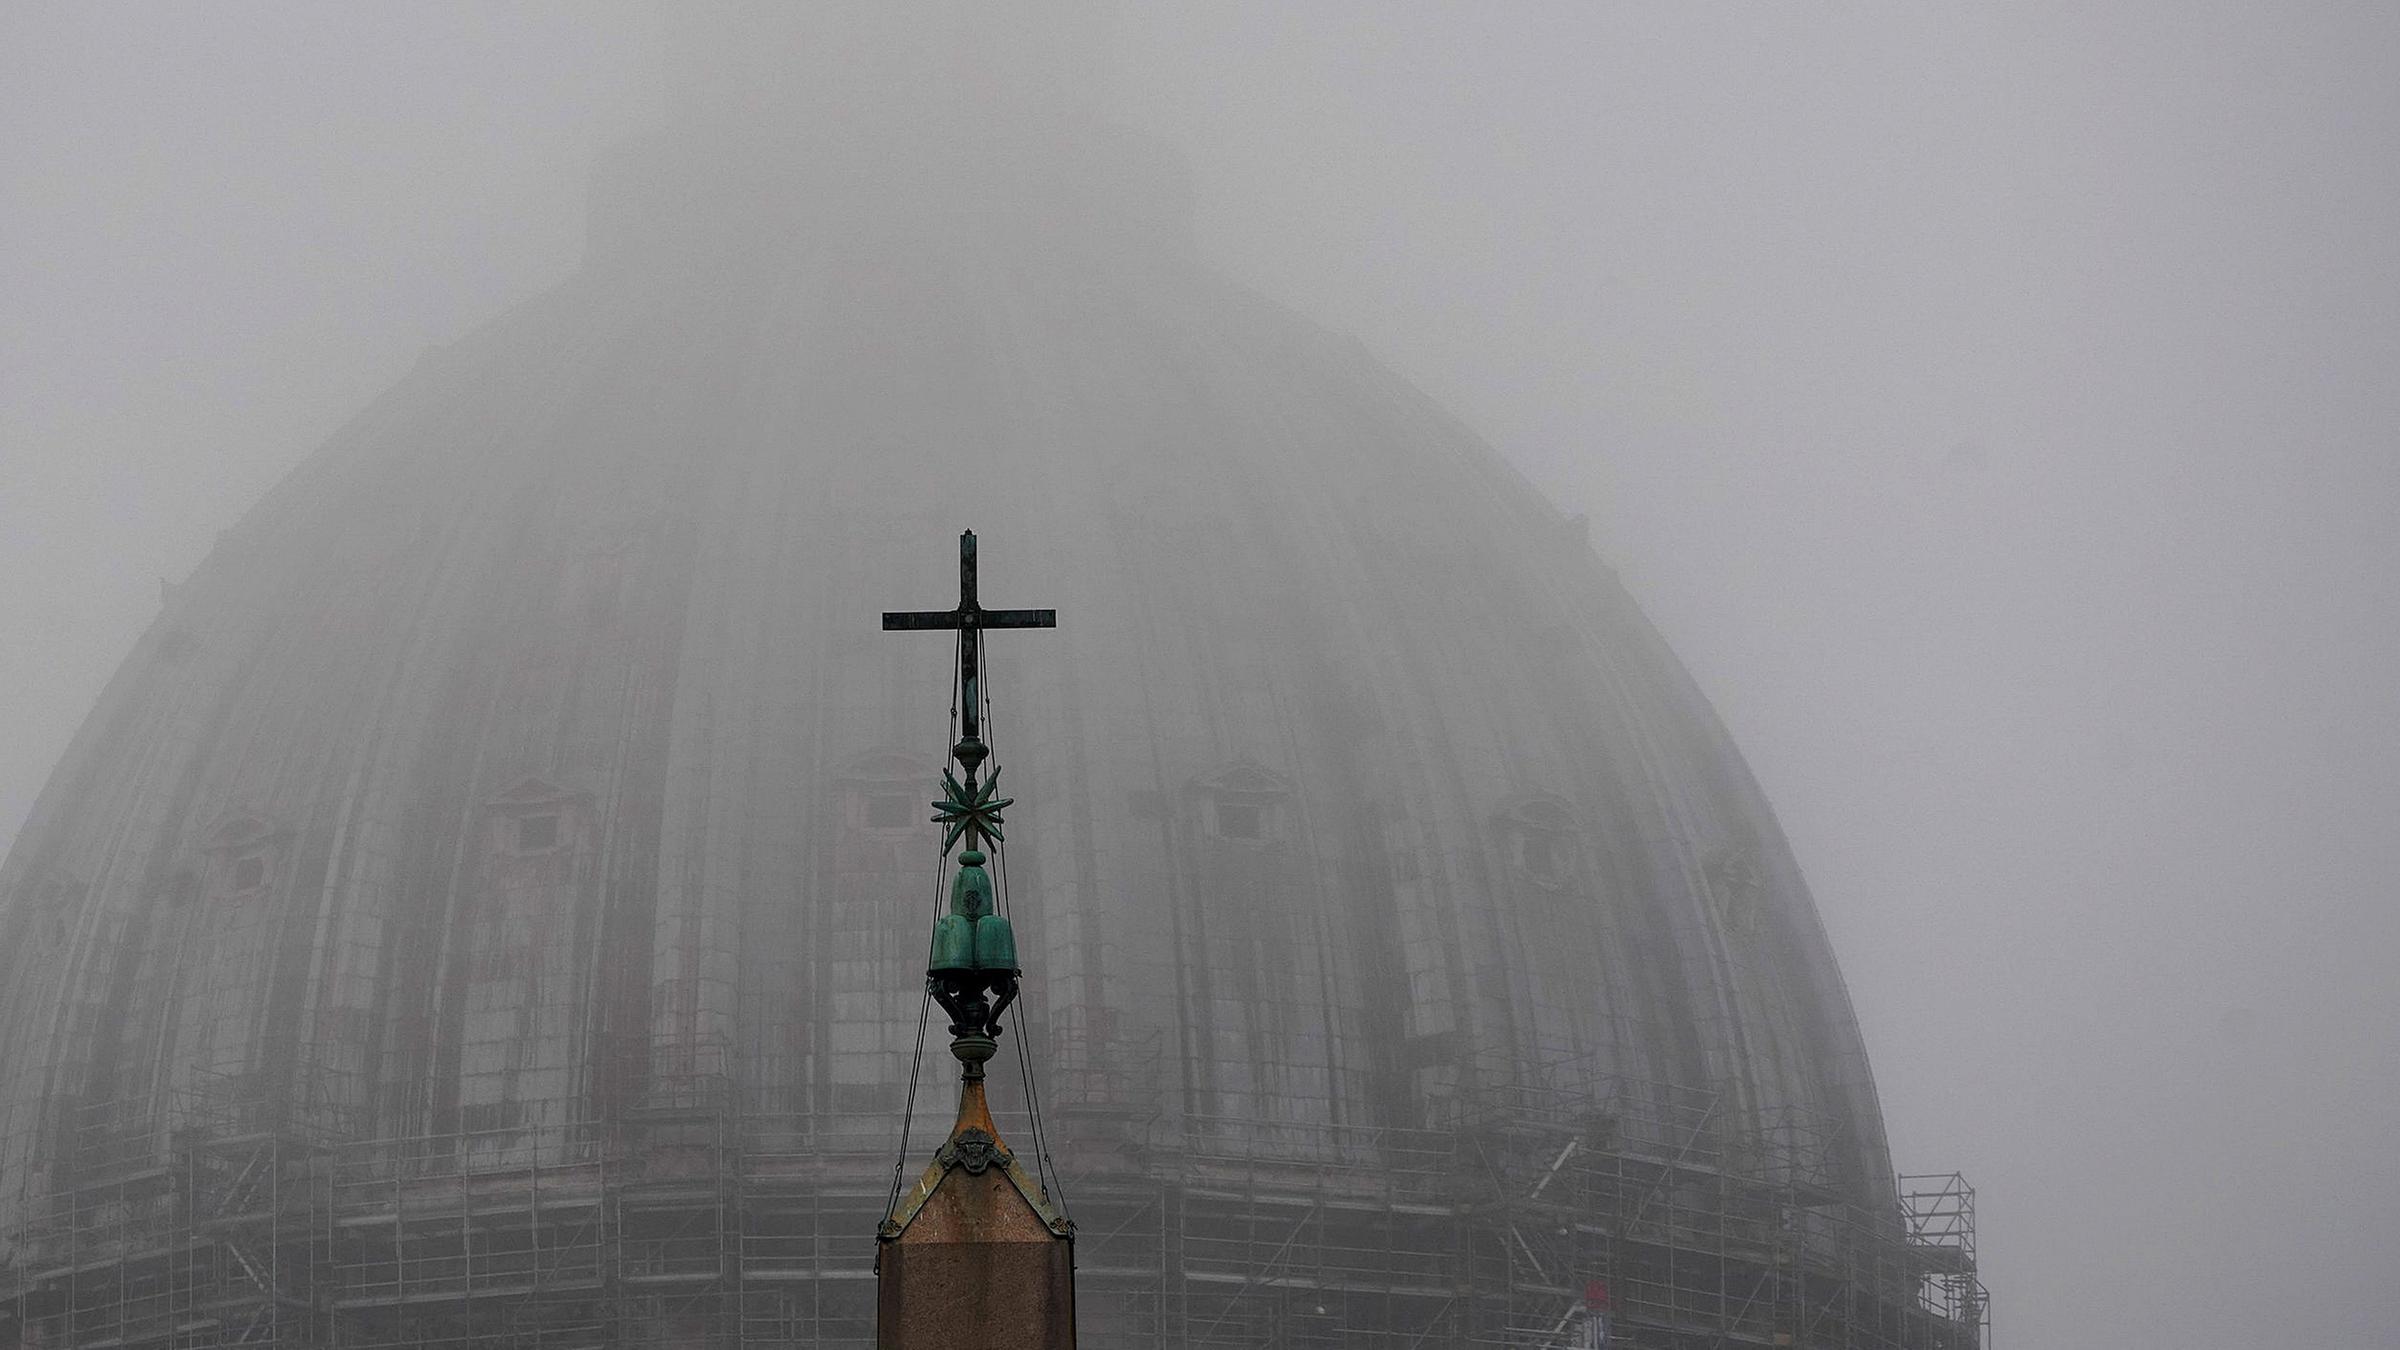 Nebelschwaden ziehen über die Kuppel des Petersdoms in Rom (Italien) aufgenommen am 19.02.2020